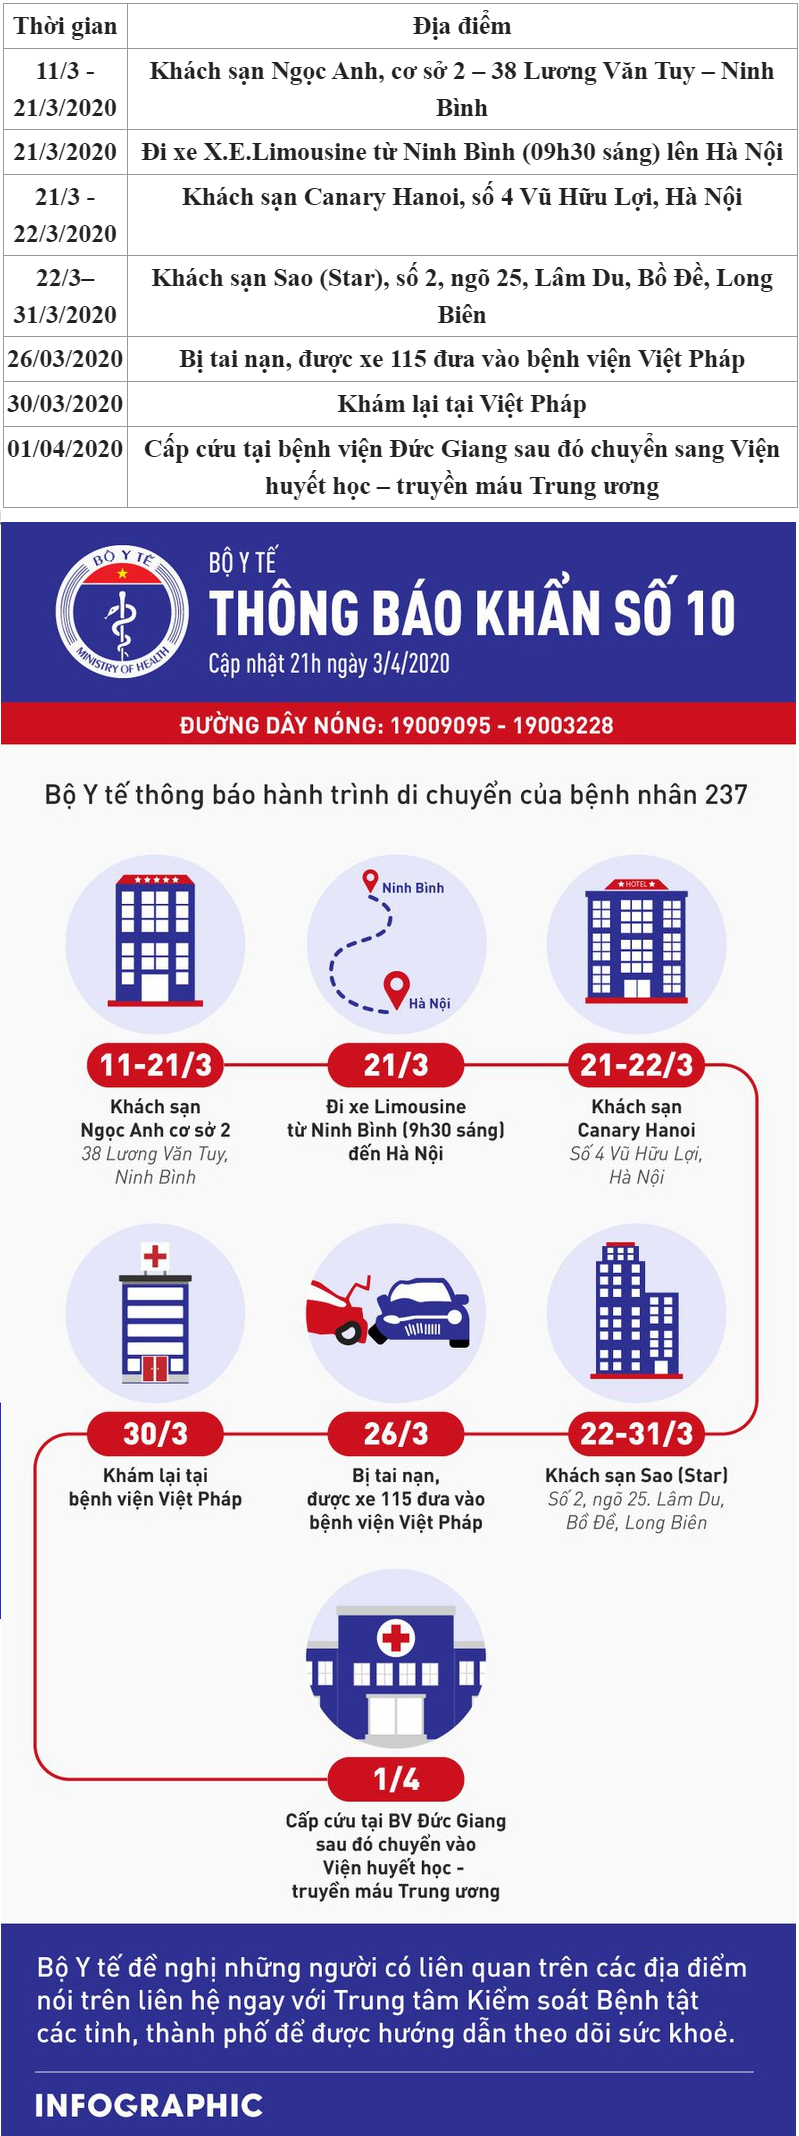 infographic thong bao khan so 10 cua bo y te